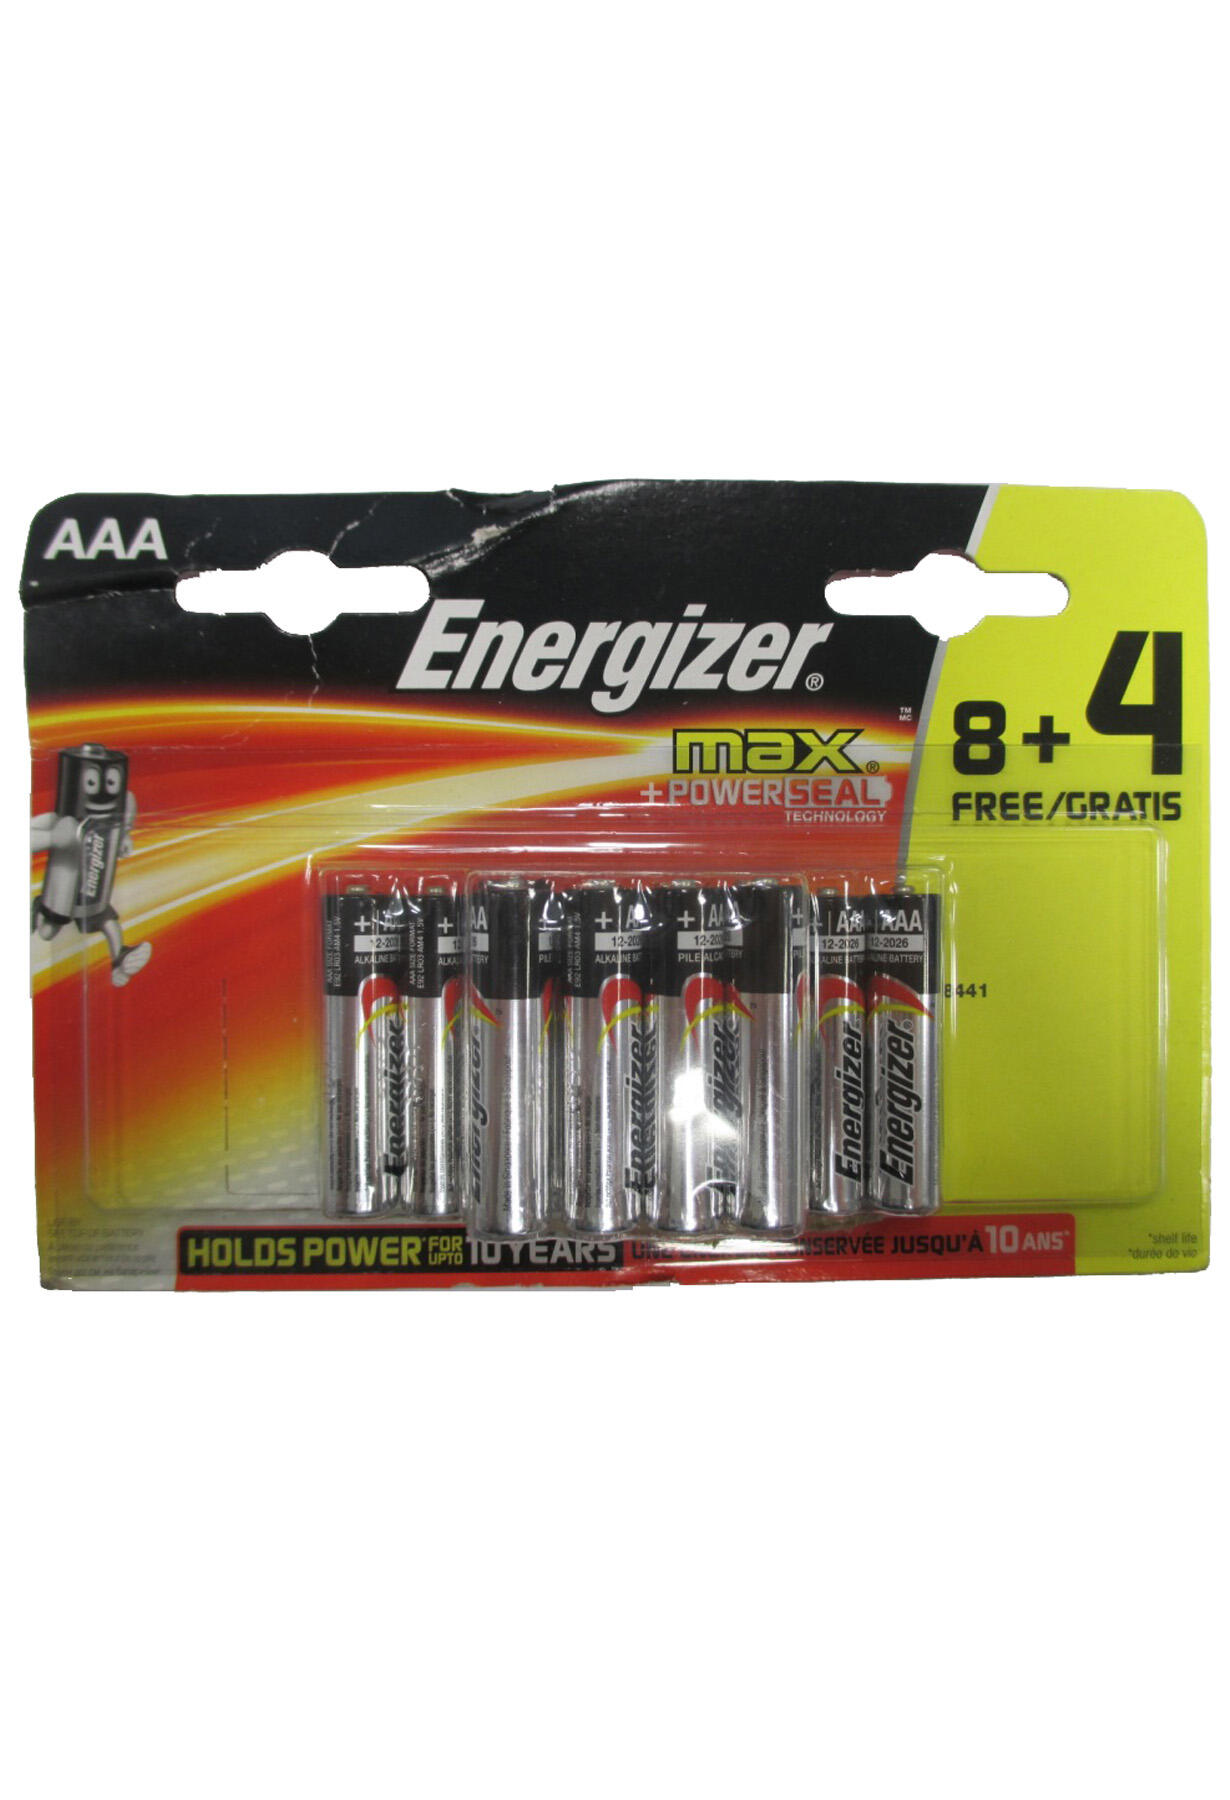 Max Energizer